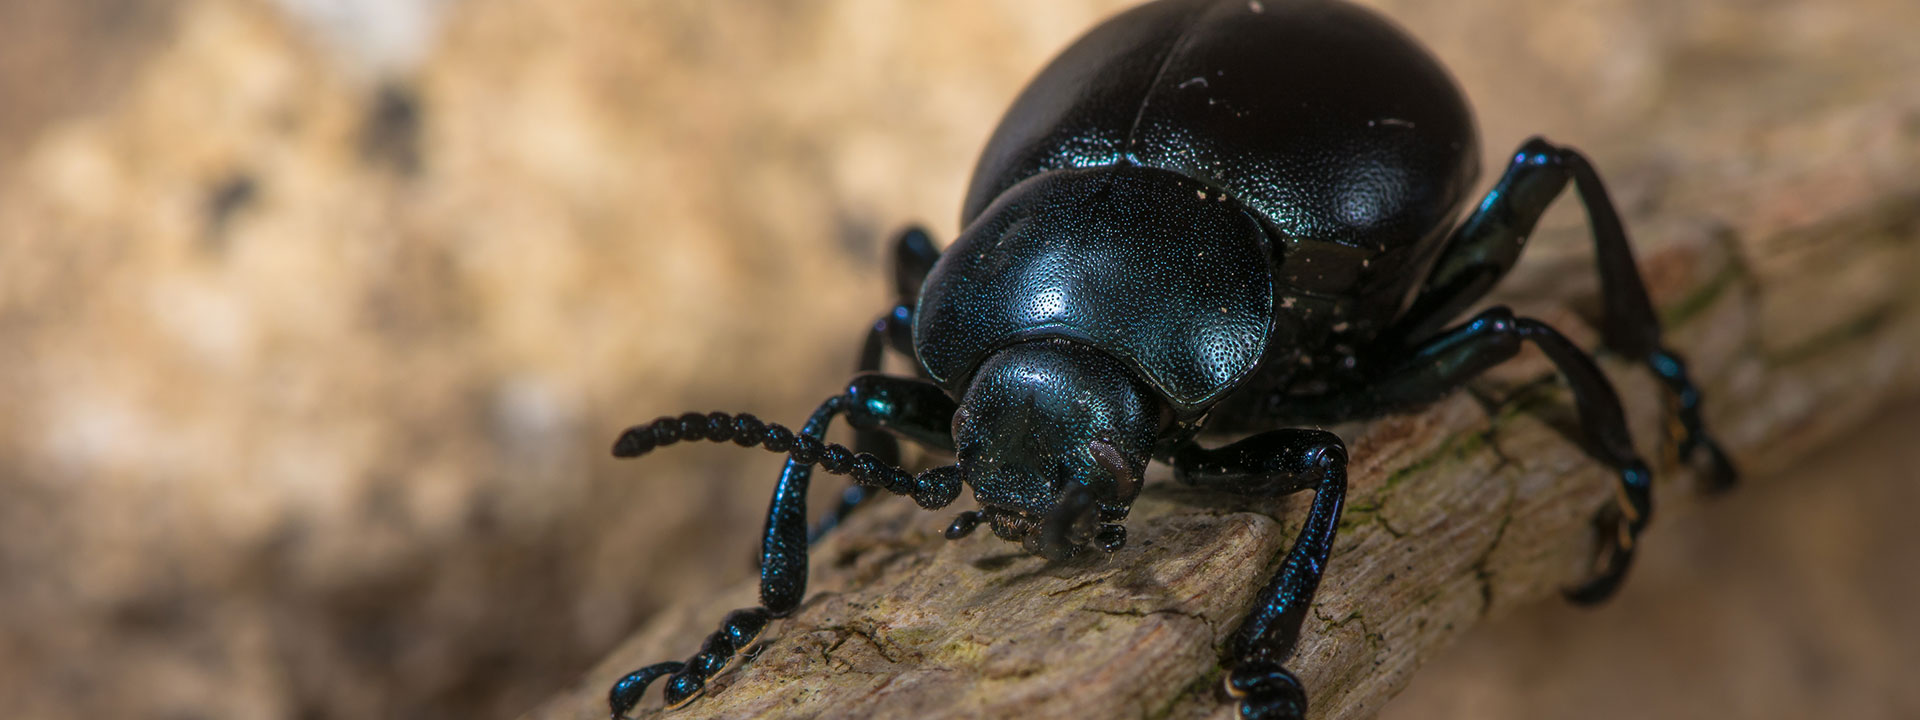 Closeup of a black beetle on a log.